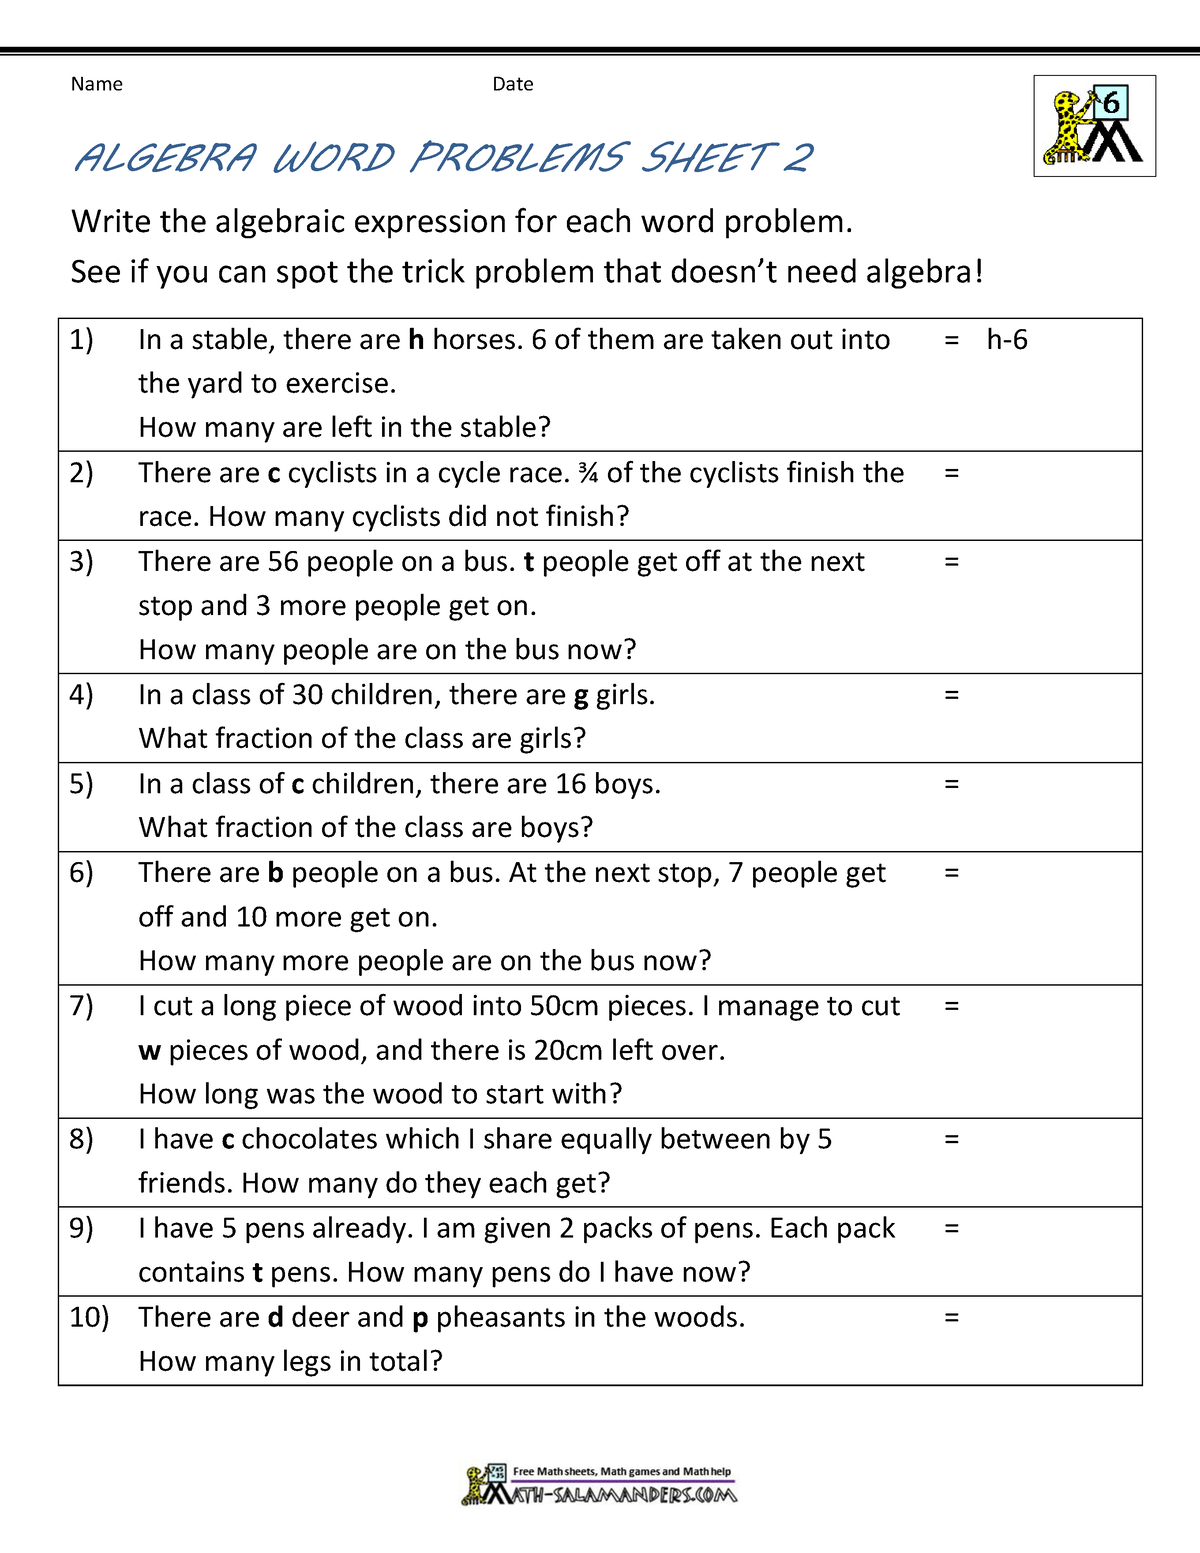 algebra-word-problems-2-name-date-algebra-word-problems-sheet-2-write